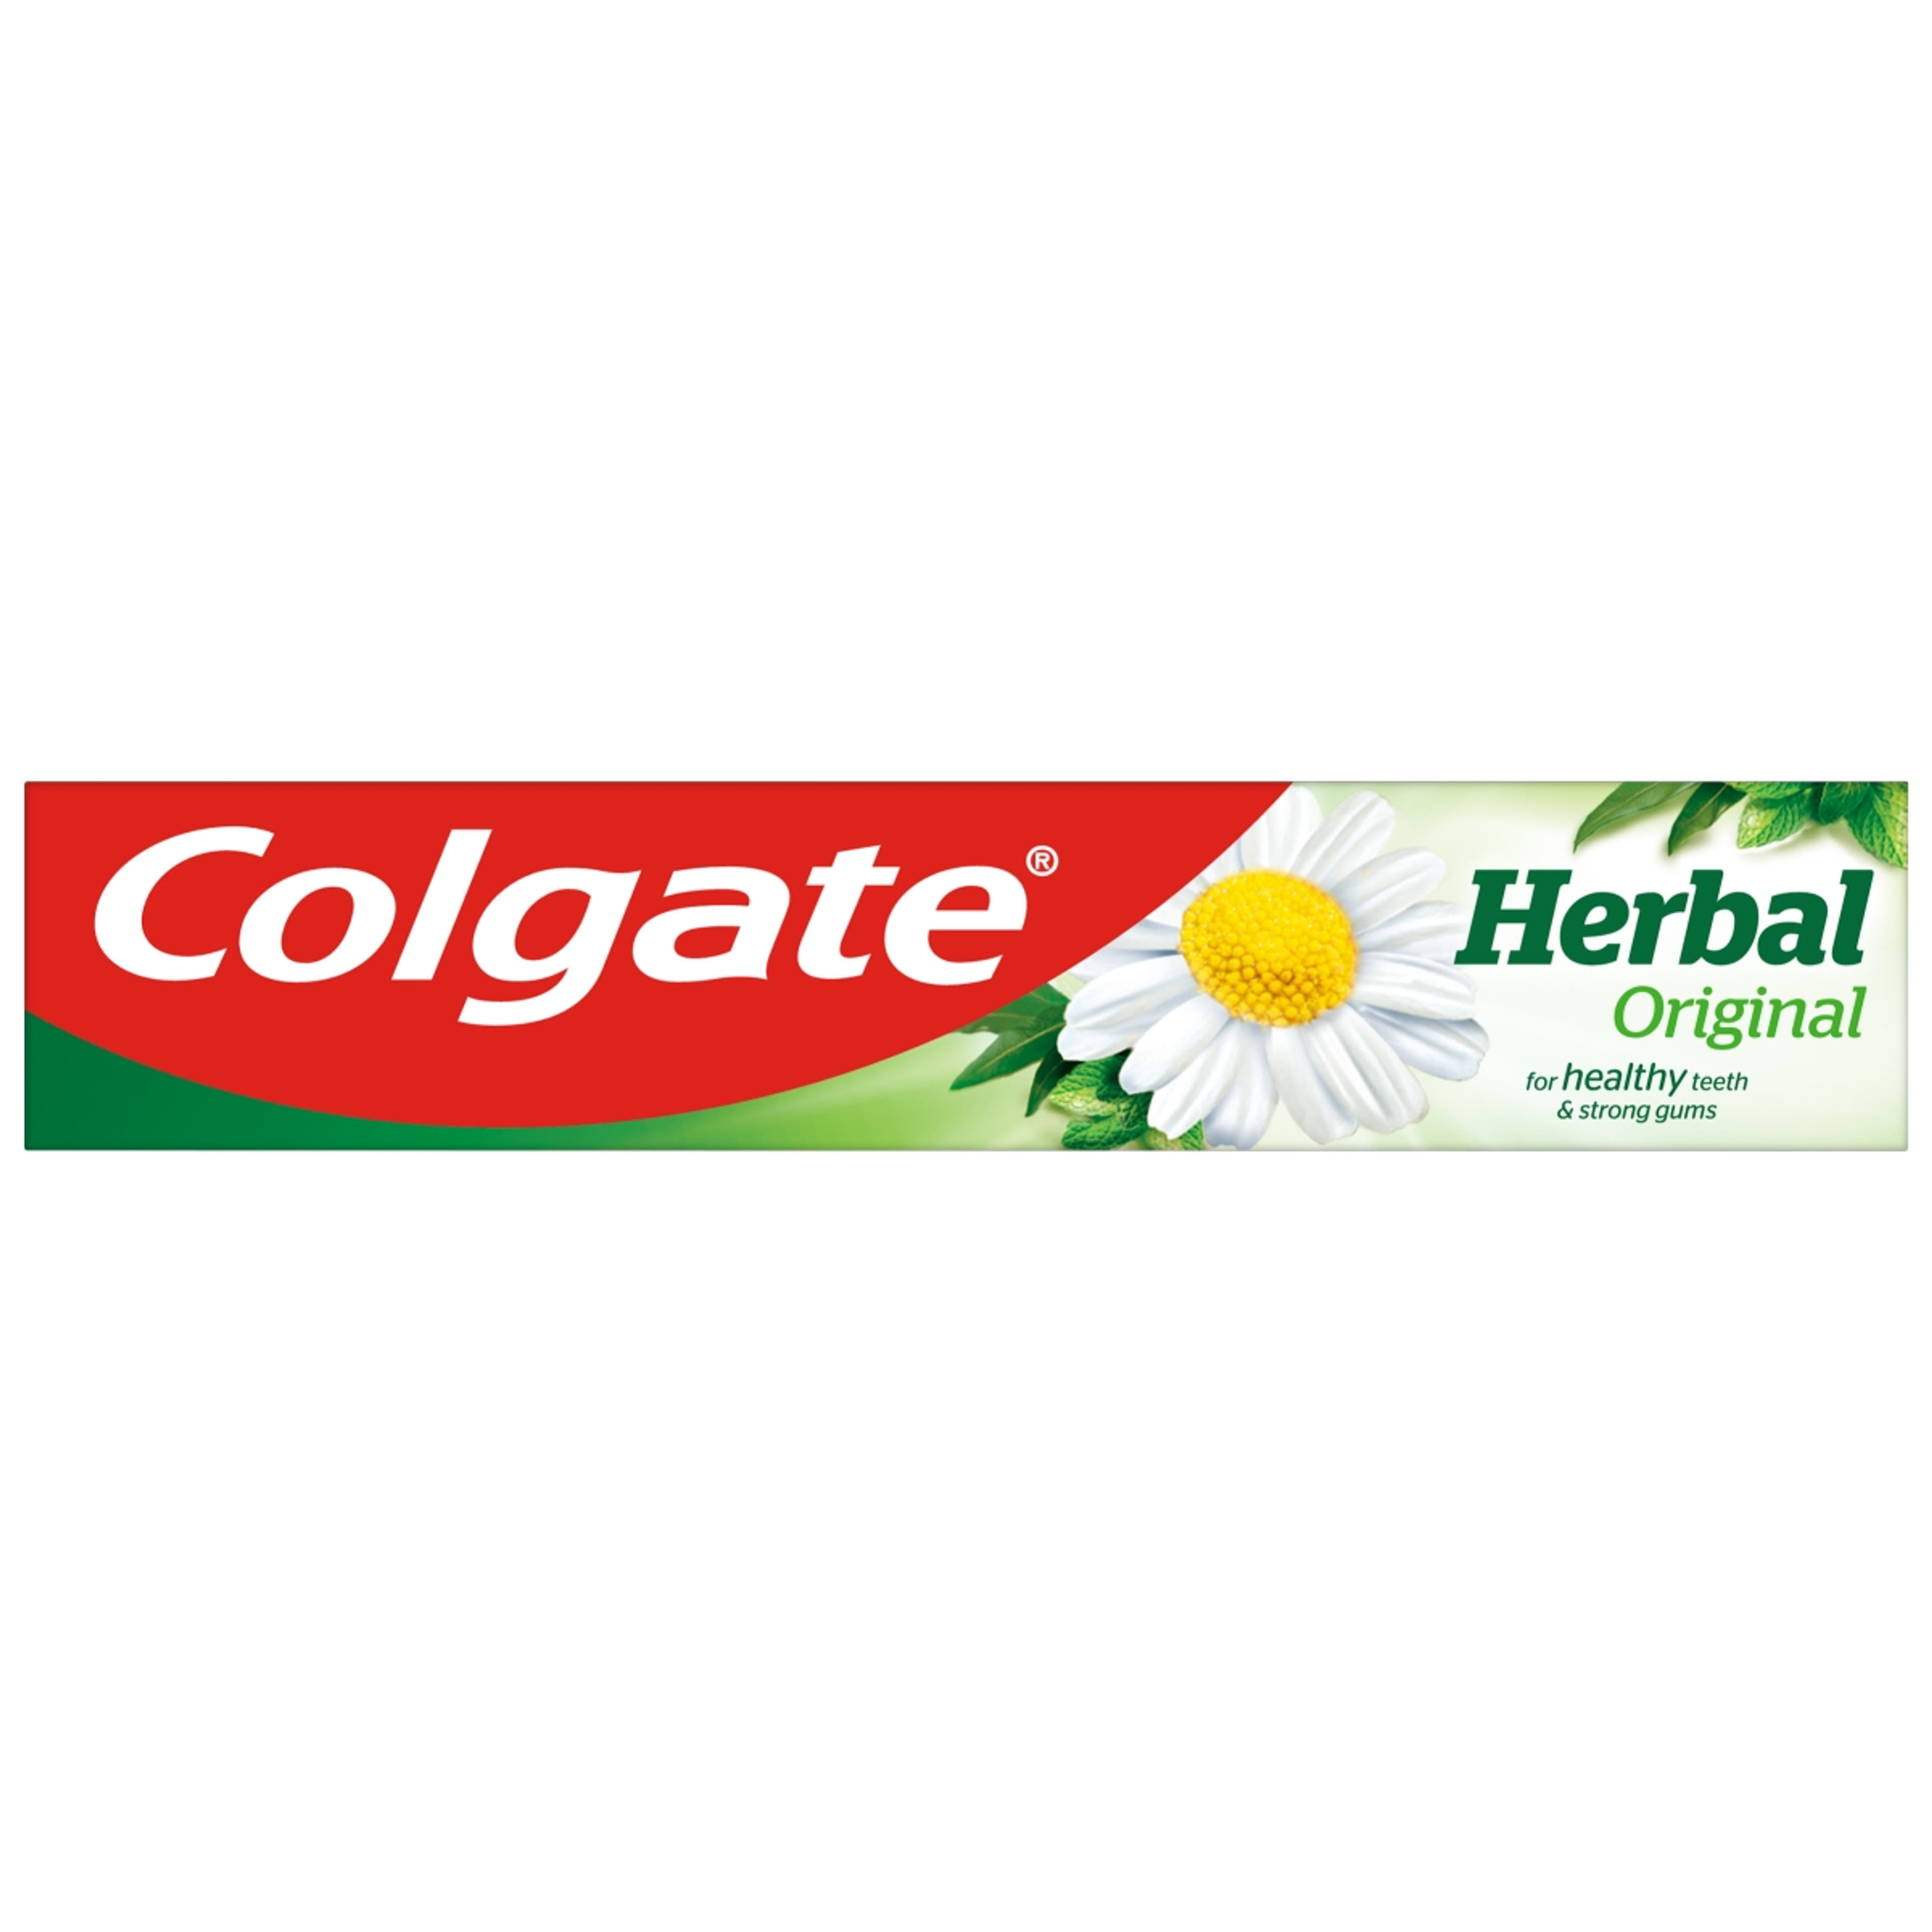 Colgate Herbal Original fogkrém - 75 ml